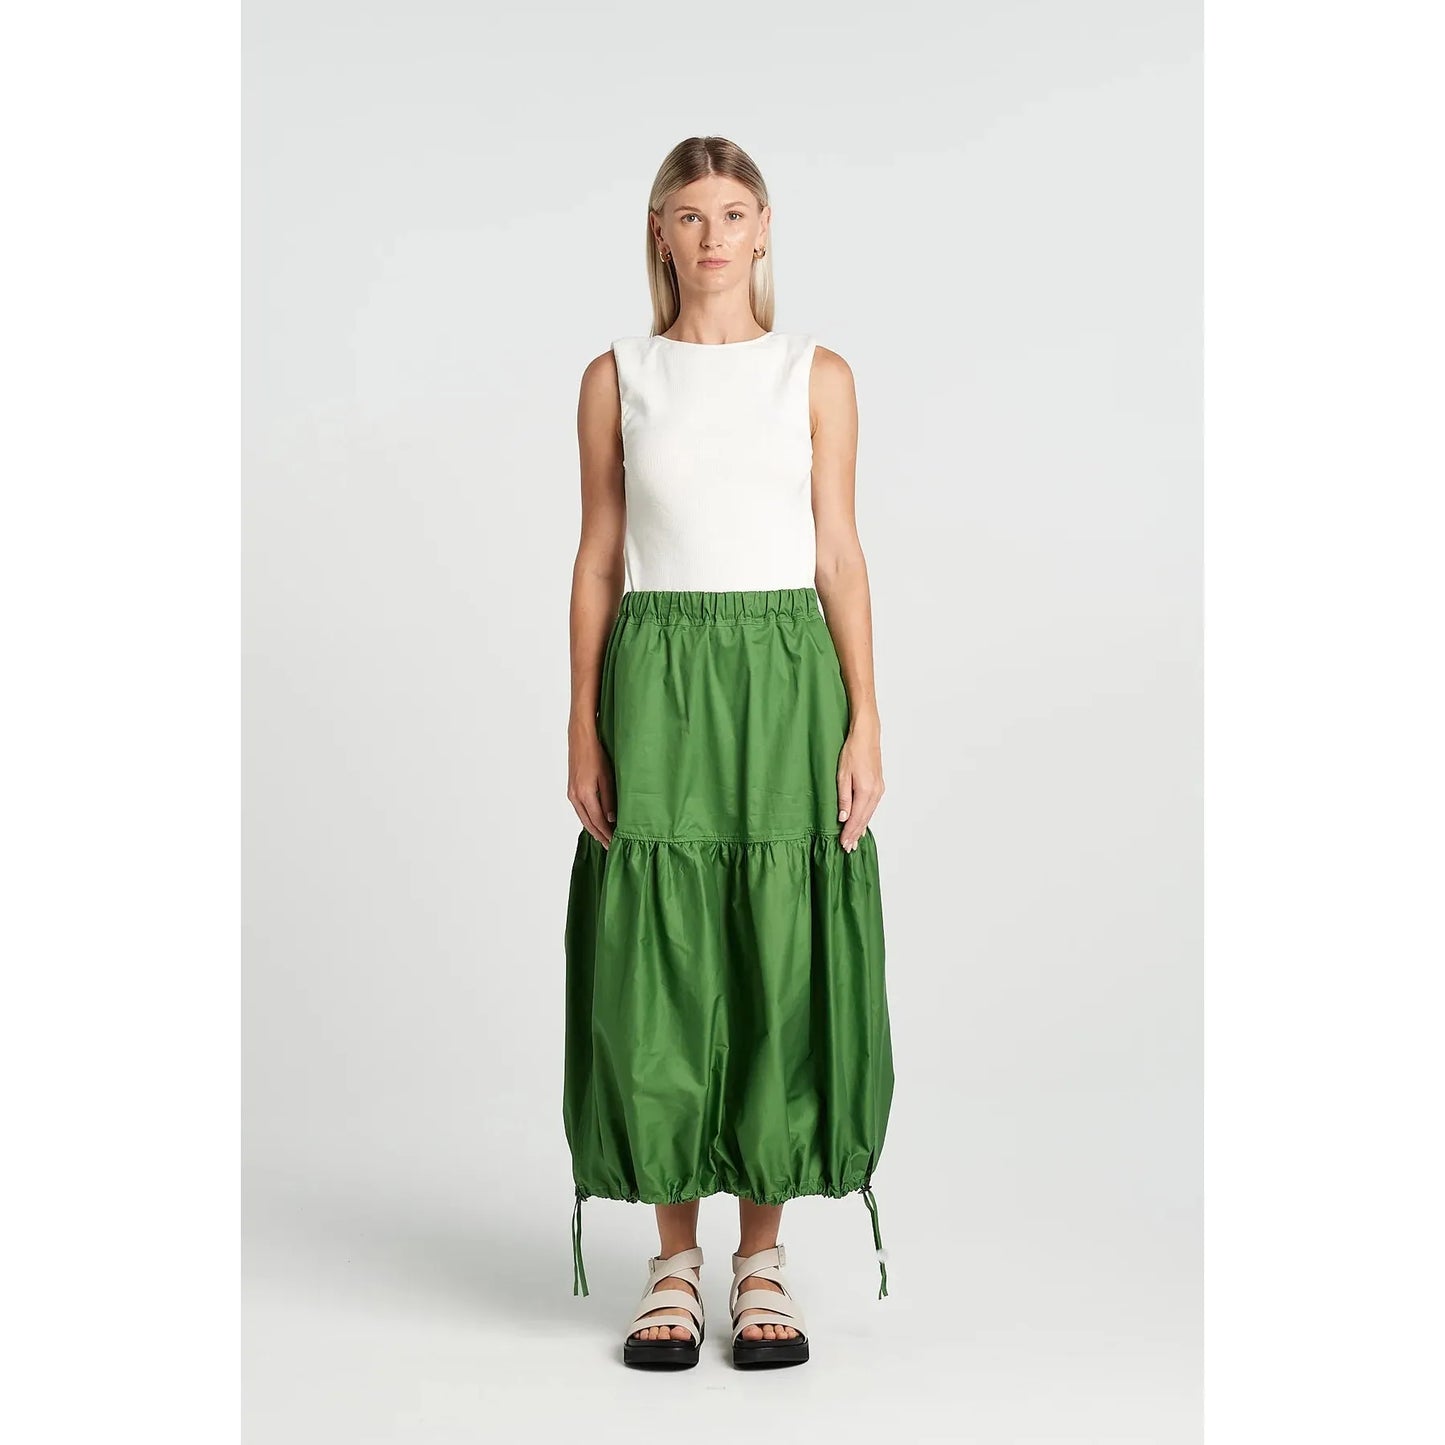 NYNE - Lola Skirt in Tropic | size 14 - RRP $339